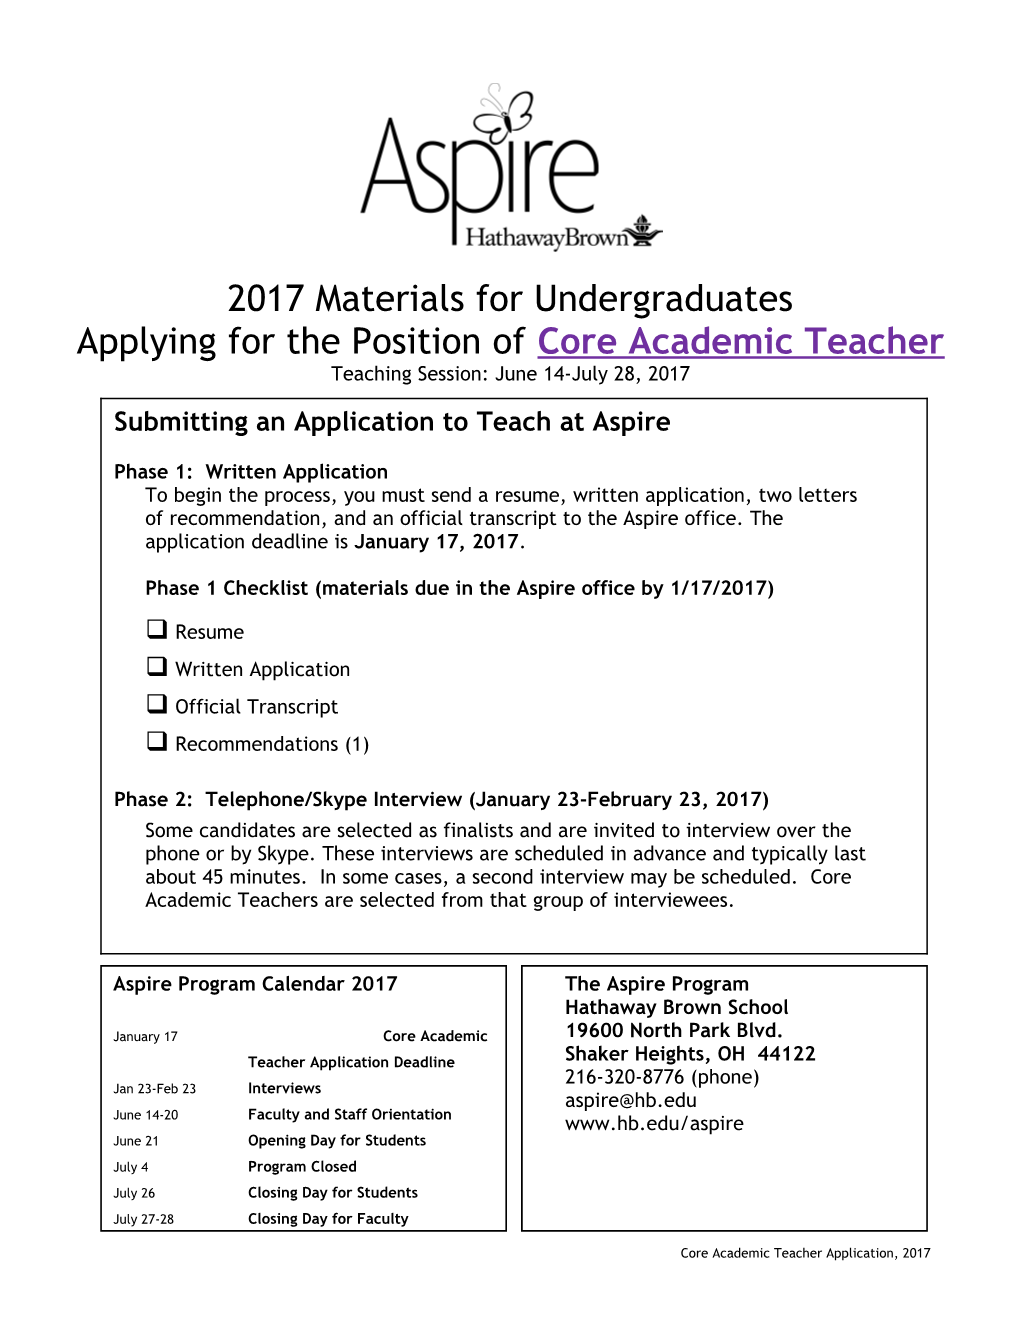 Applying for the Position of Core Academic Teacher